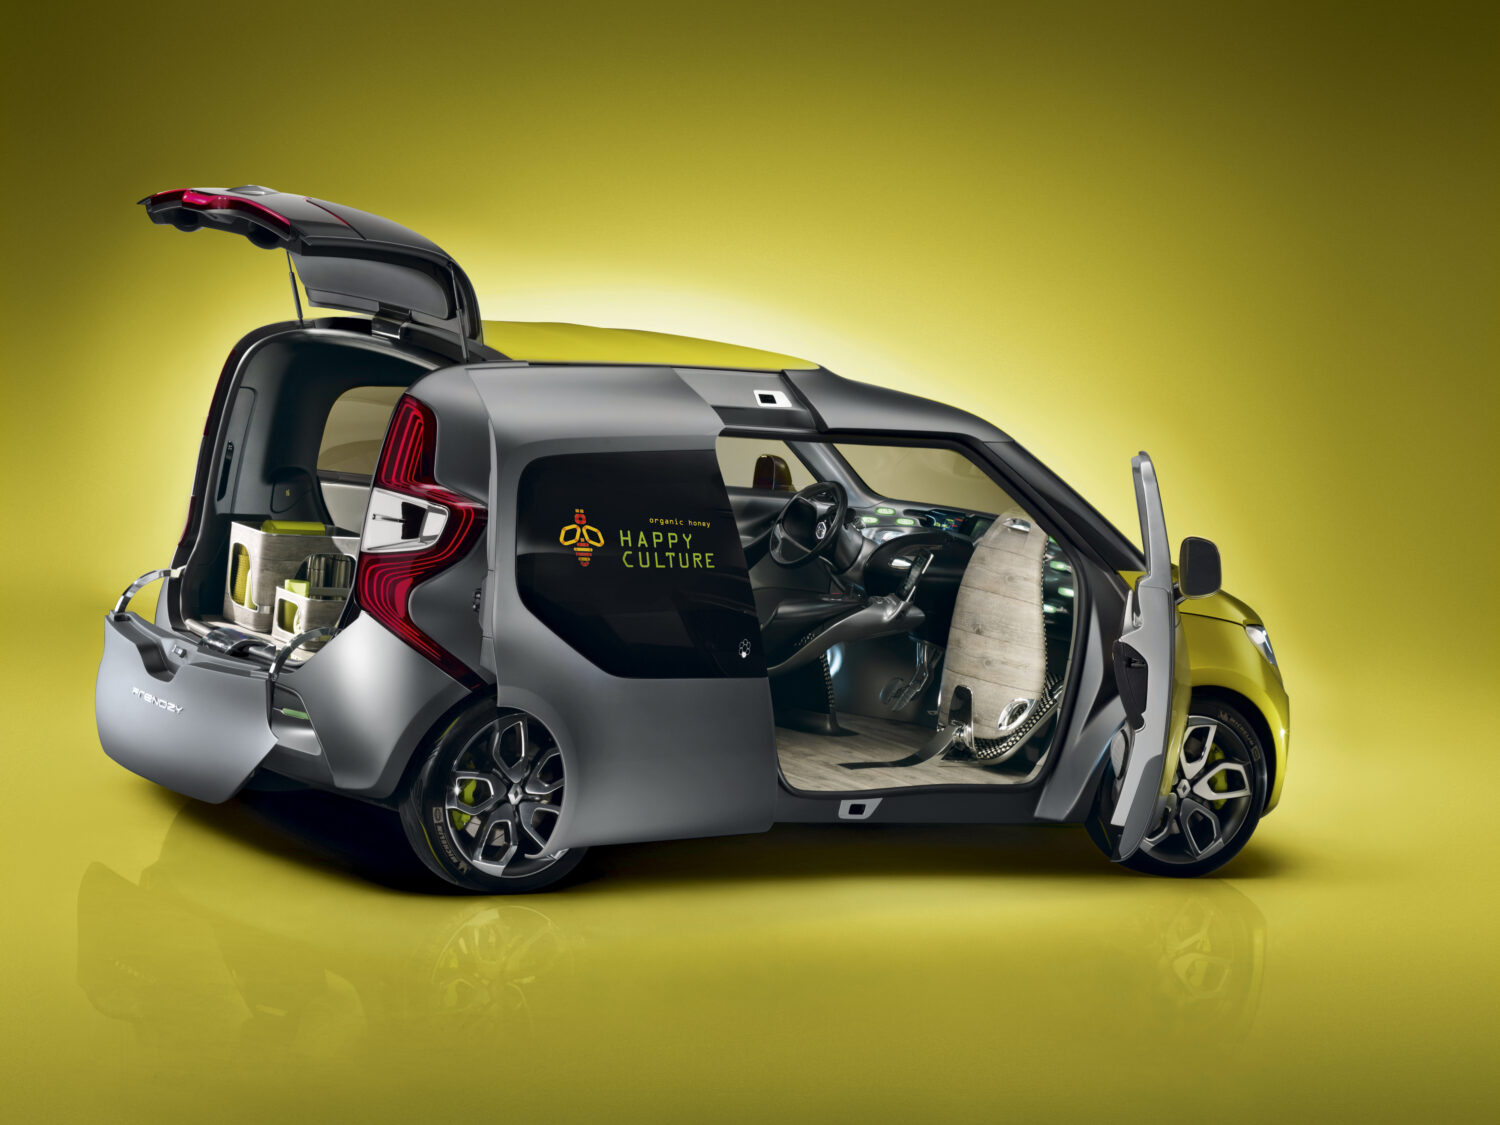 2022 - Story Renault - Open Sesame: All-new Kangoo Van is still blazing new trails